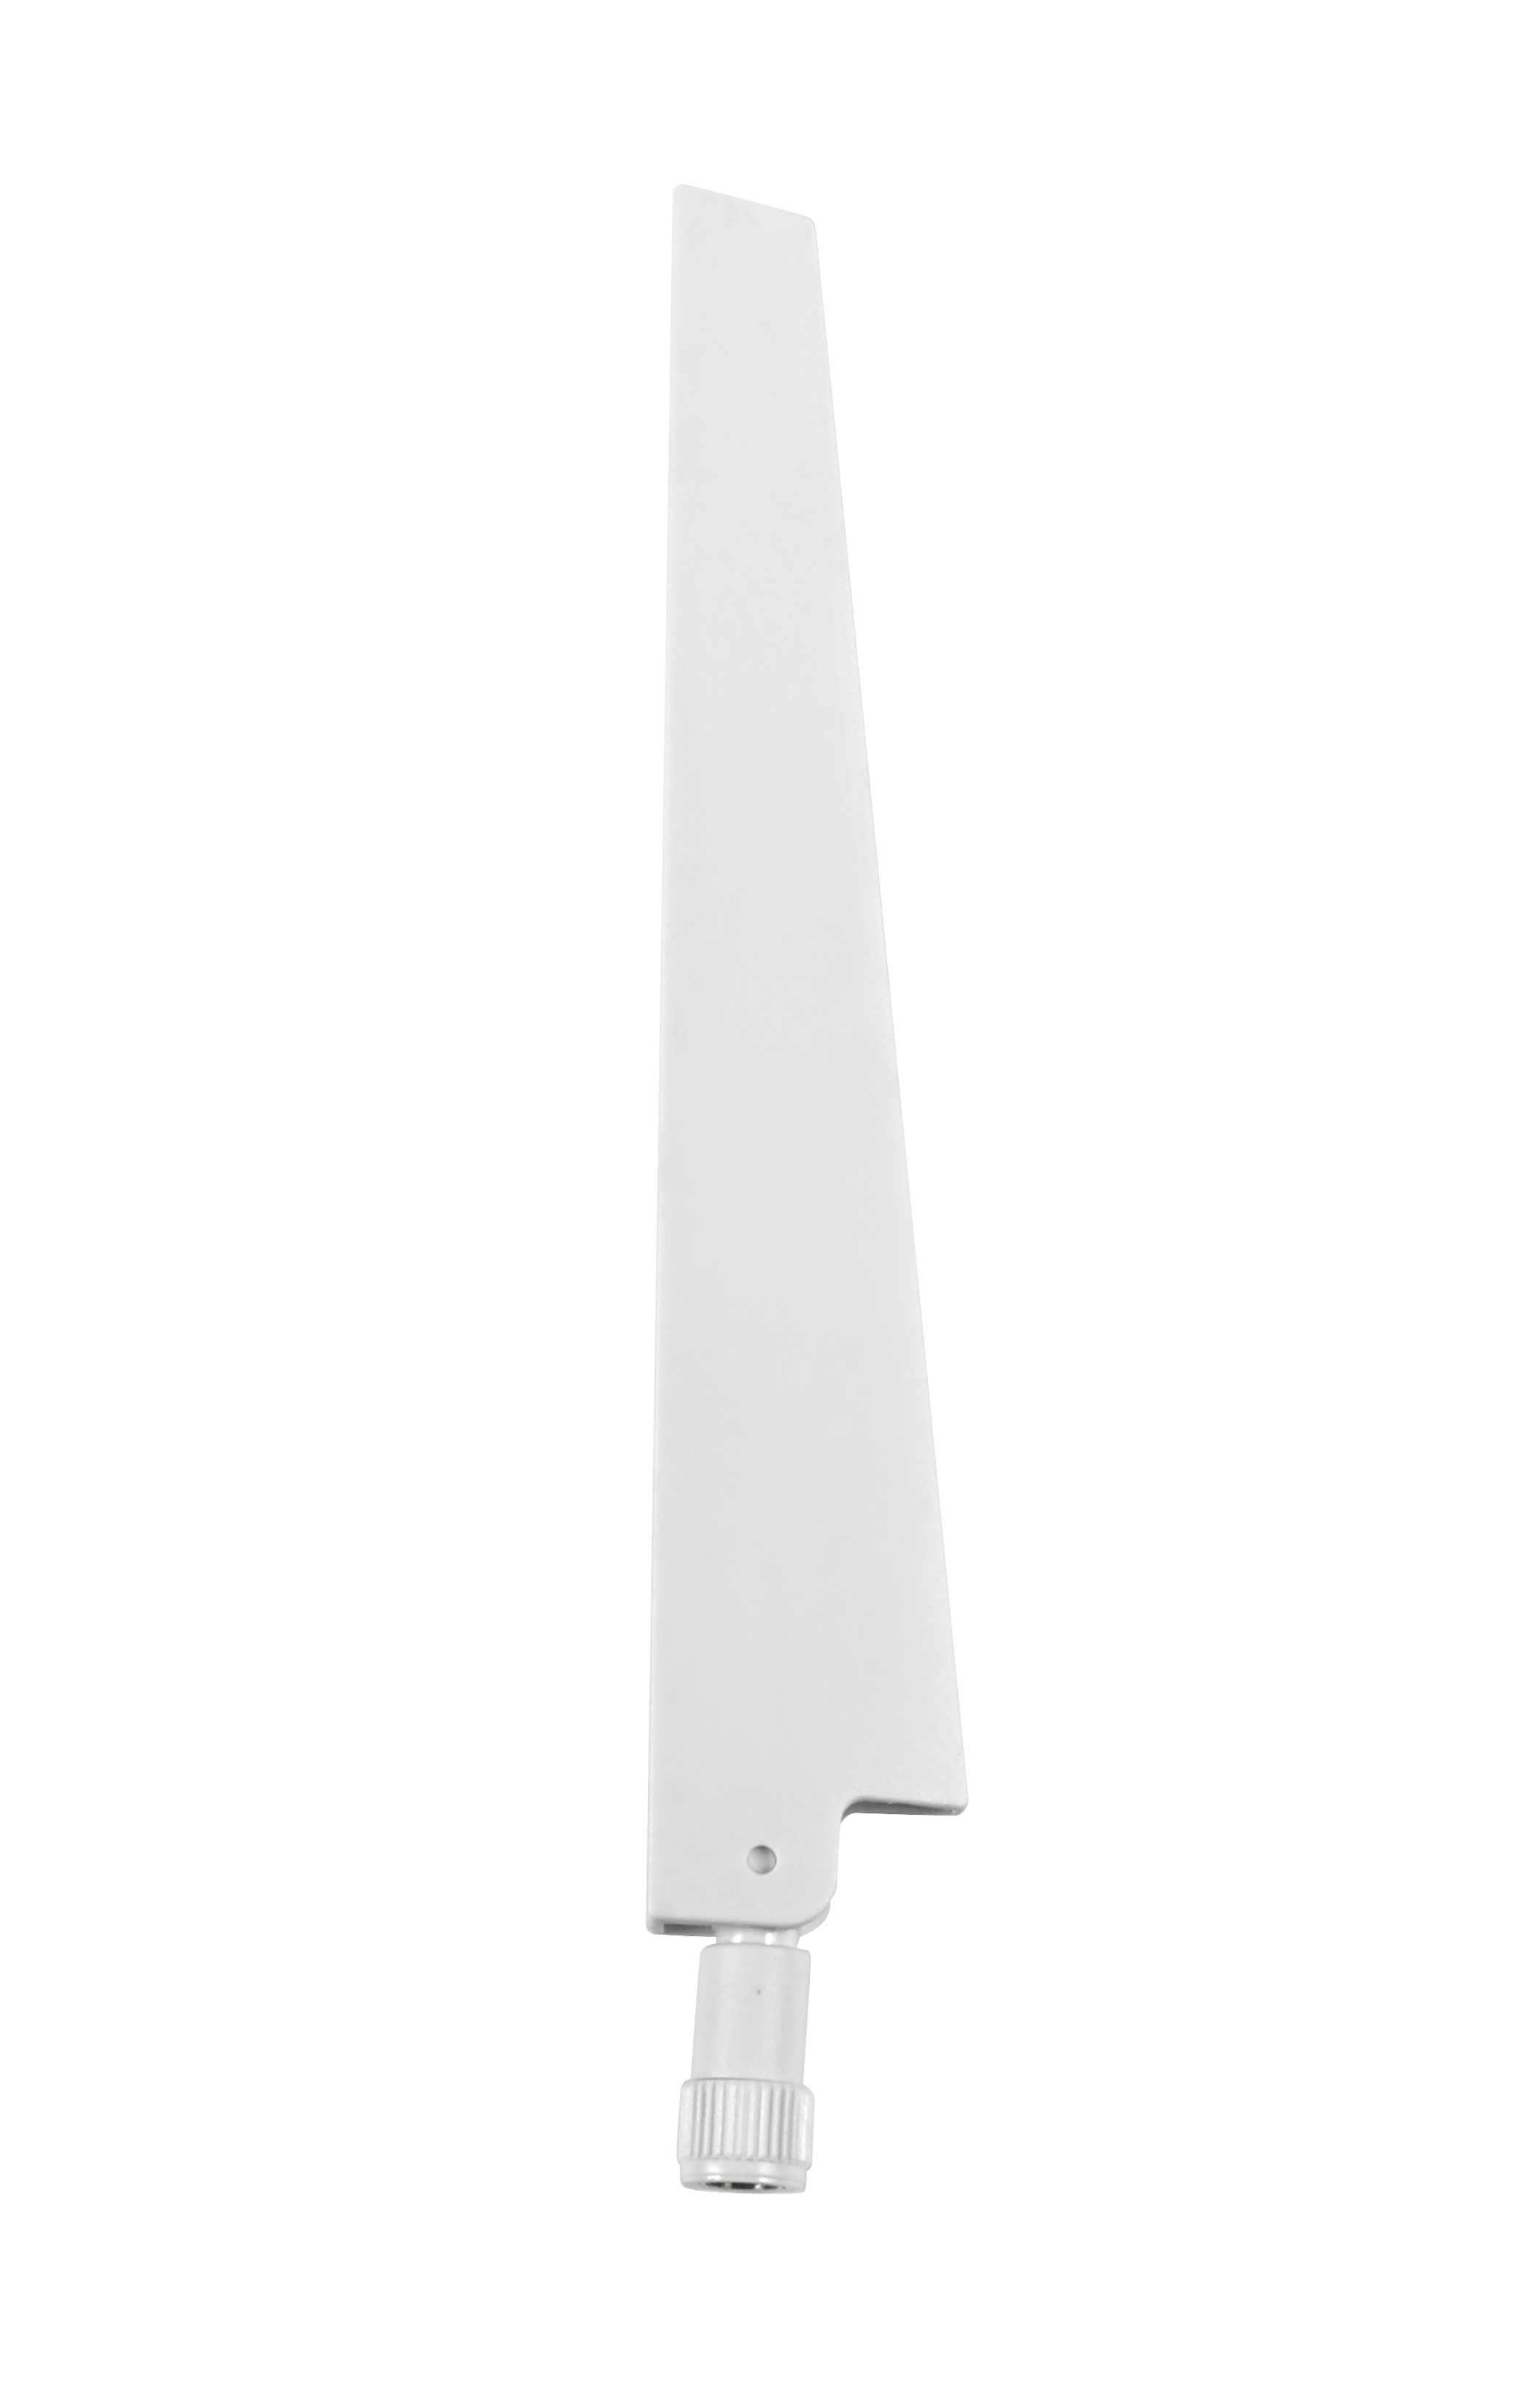 Netgear Antenne - Wi-Fi - 2,5 dBi (für 2,4 GHz), 4 dBi (für 5 GHz)